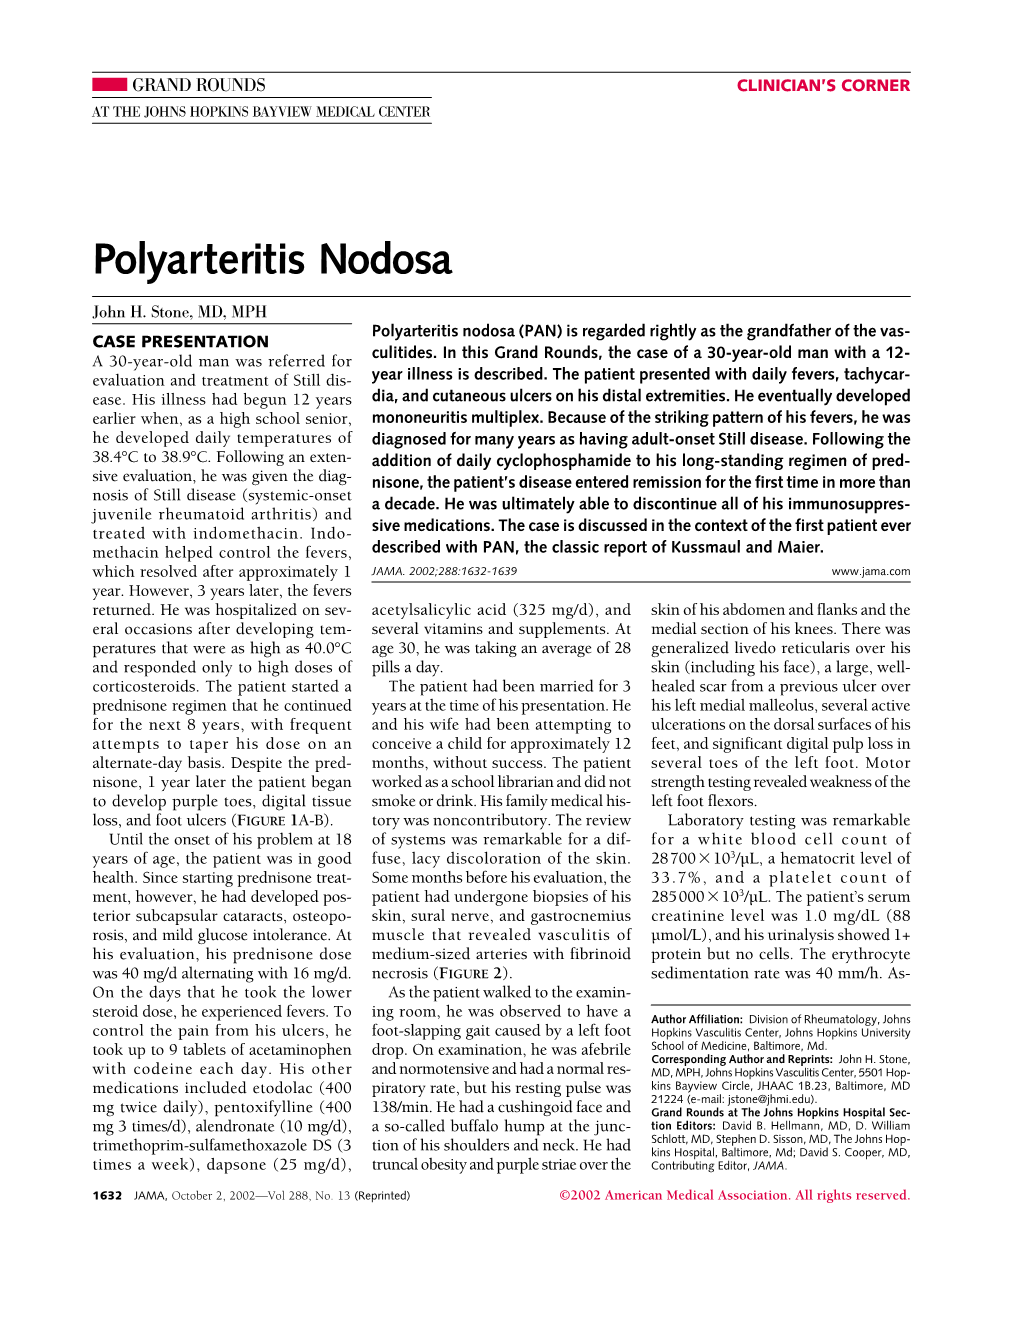 Polyarteritis Nodosa